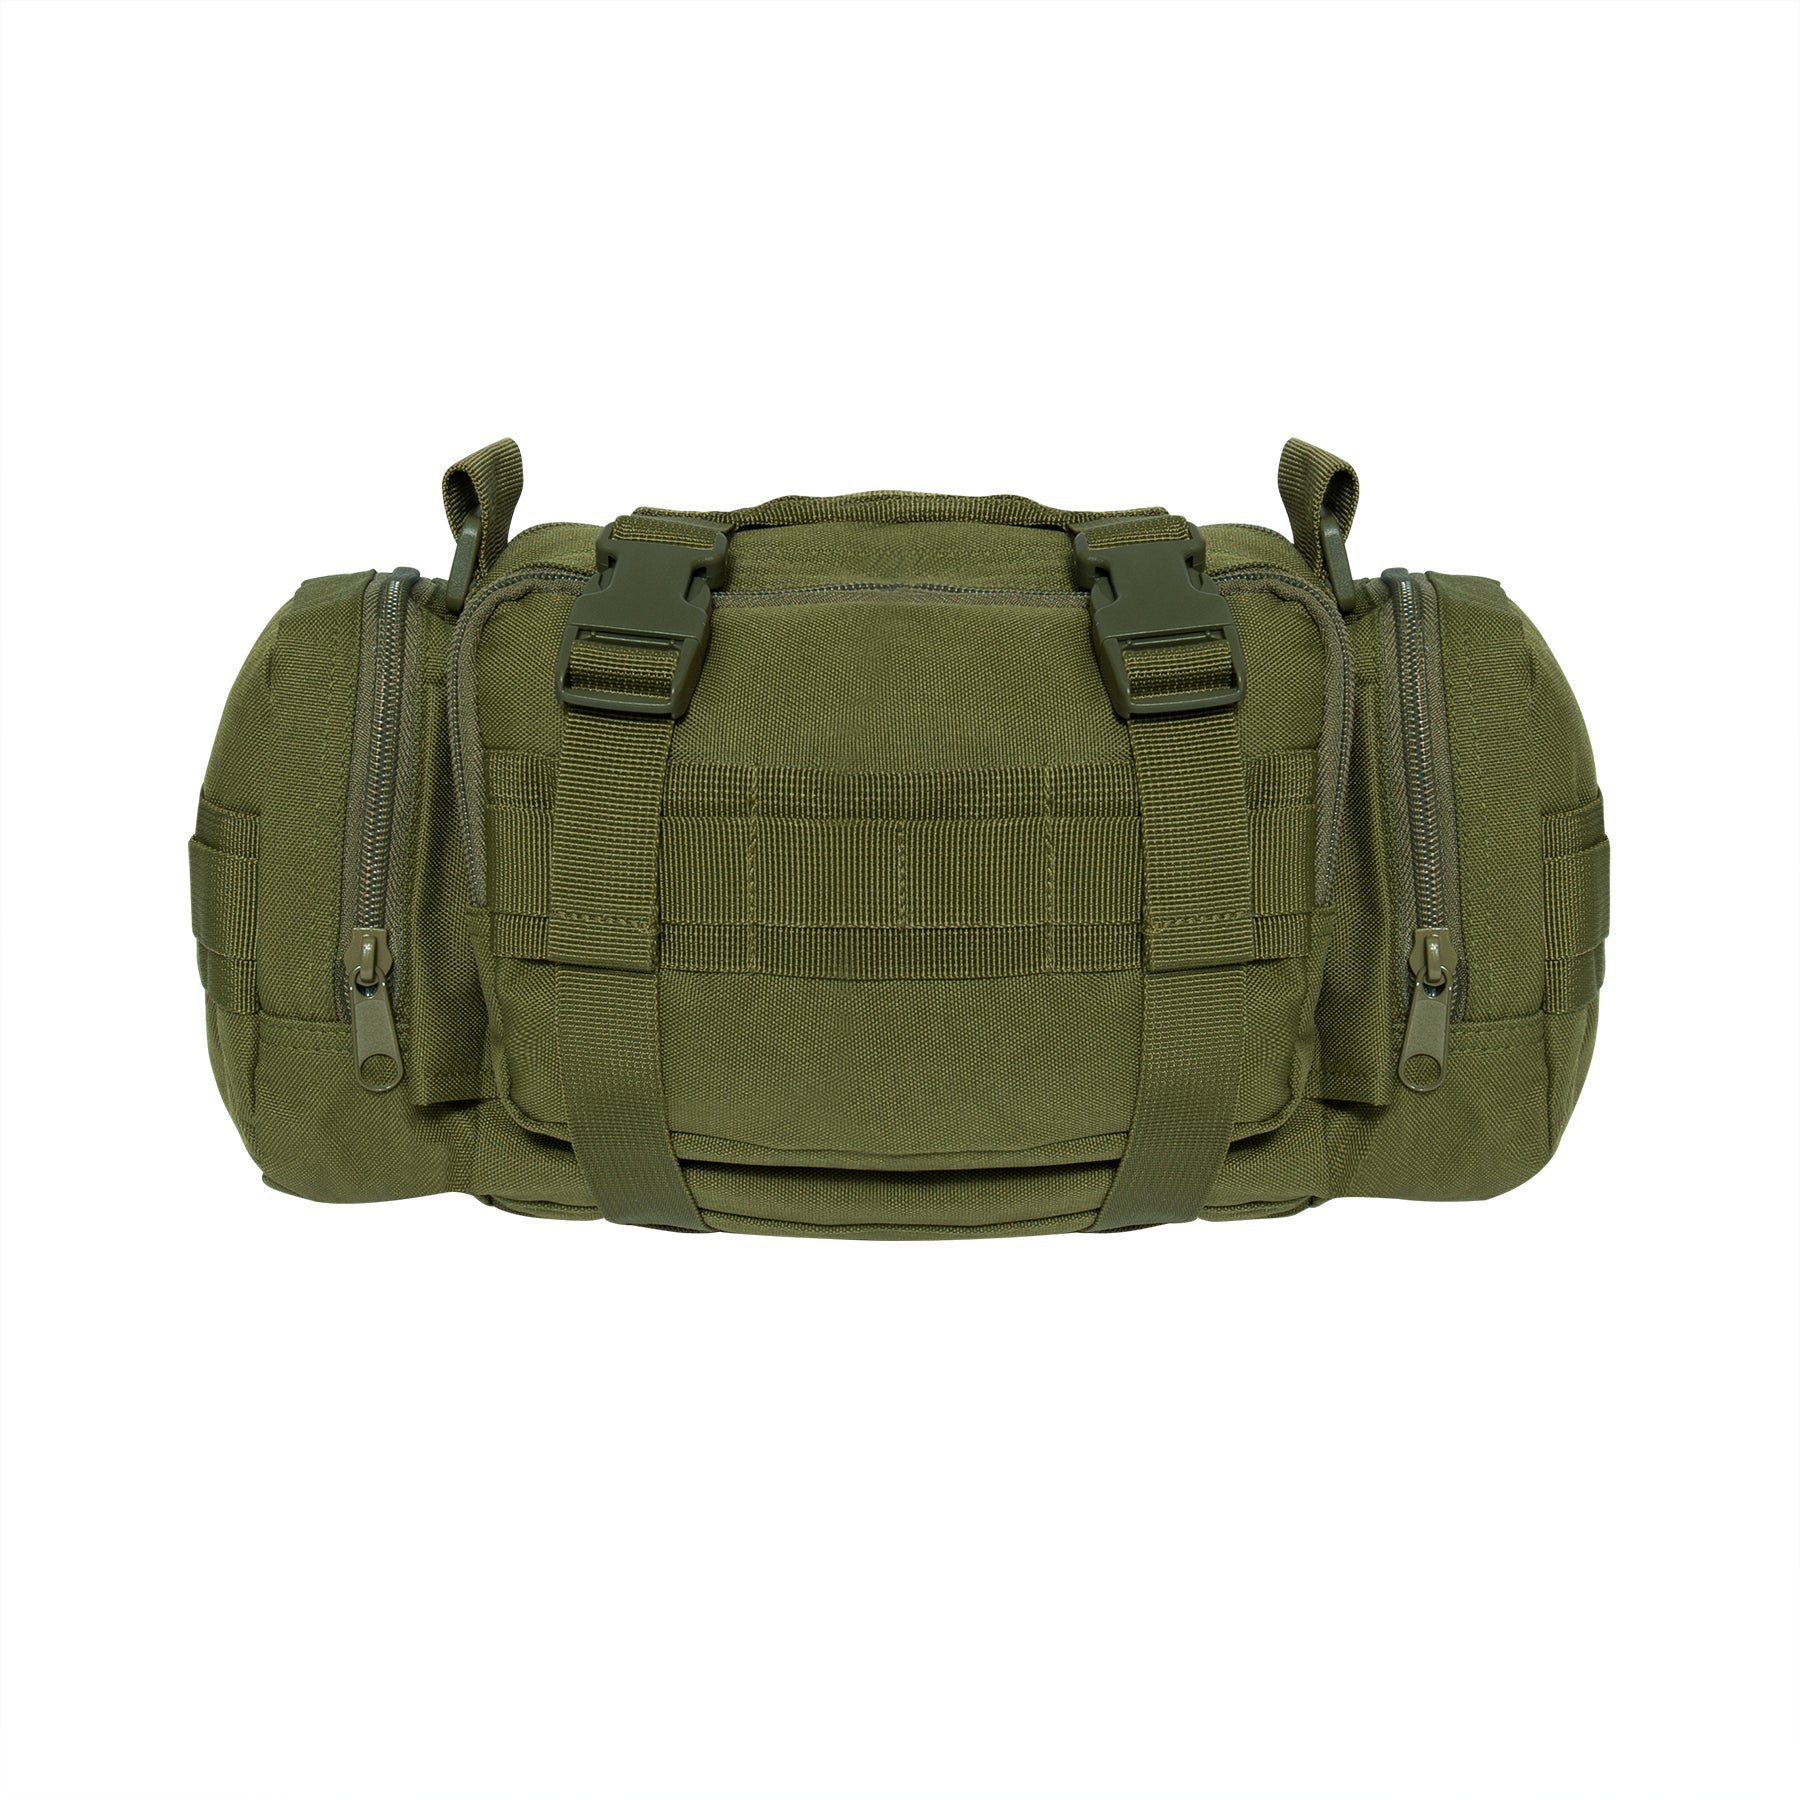 Milspec Fast Access Tactical Trauma Kit First Aid Supplies & Snake Bite Kits MilTac Tactical Military Outdoor Gear Australia